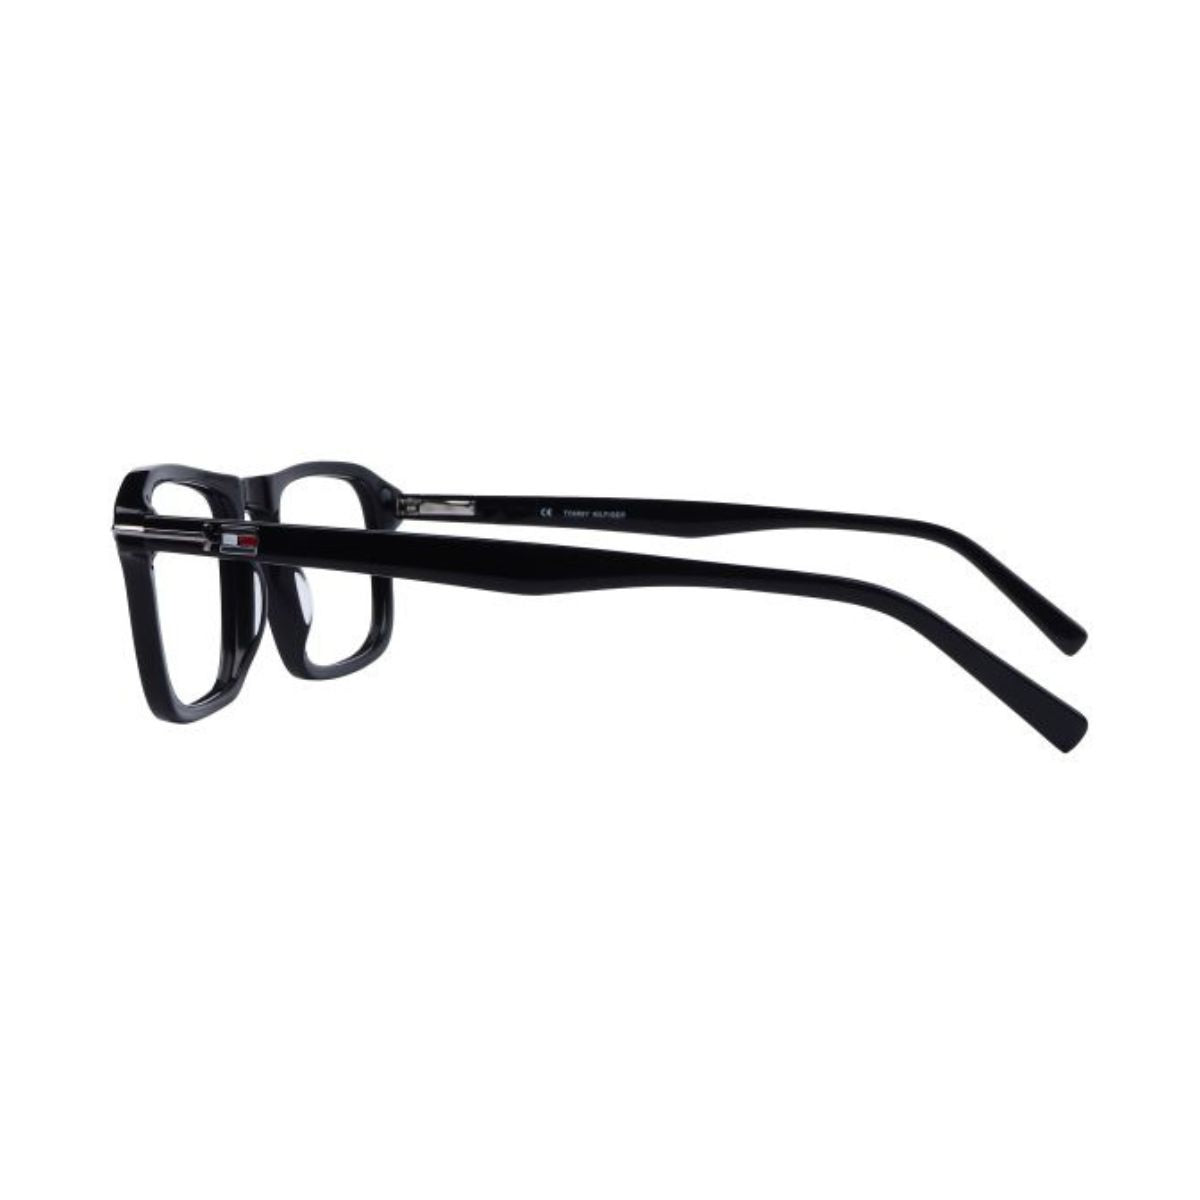 "best Tommy Hilfiger 3235 C1 optical frame &eyeglasses frame for men's and women's online in india"